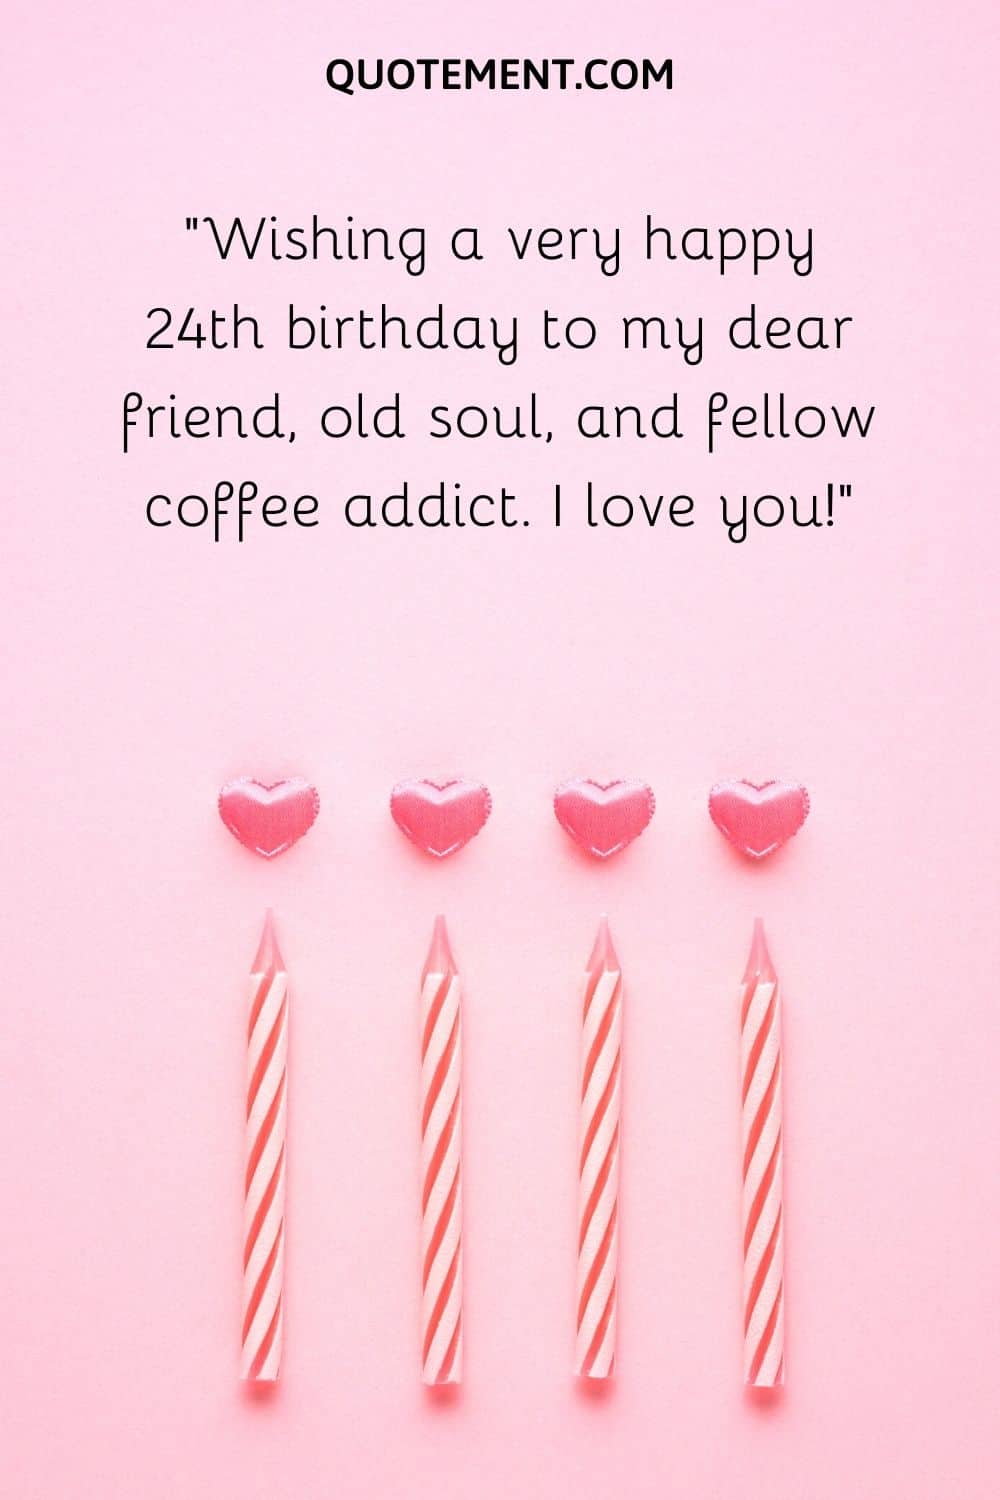 Wishing a very happy 24th birthday